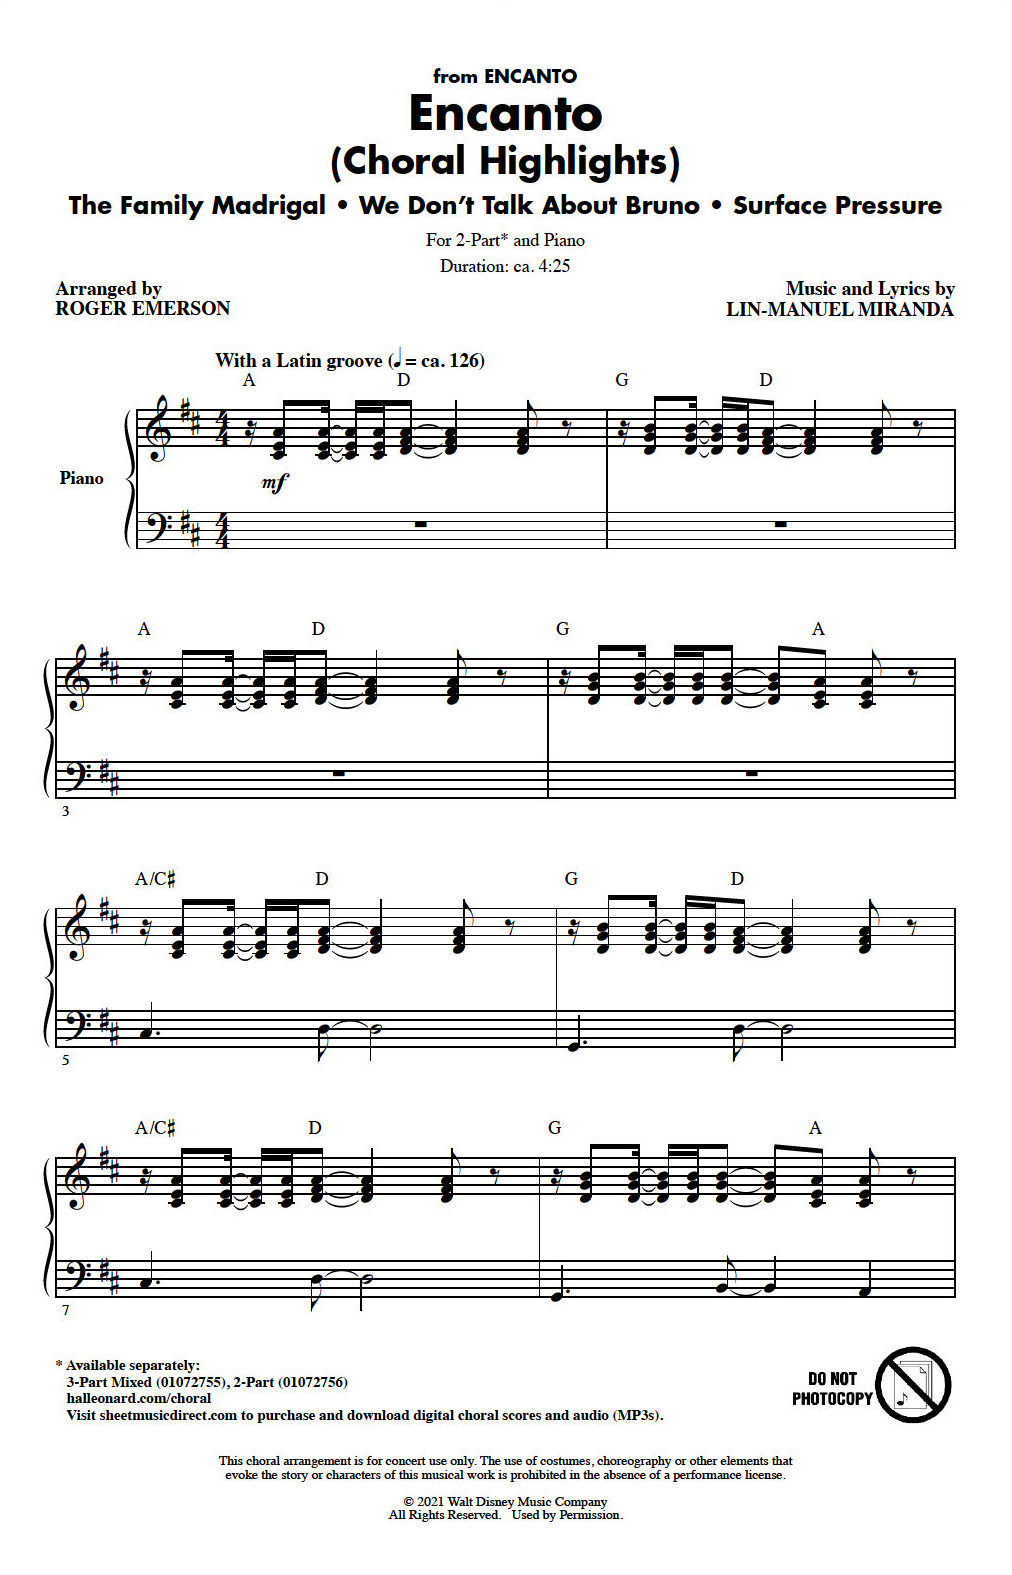 Lin-Manuel Miranda Encanto (Choral Highlights) (arr. Roger Emerson) sheet music notes and chords arranged for 2-Part Choir